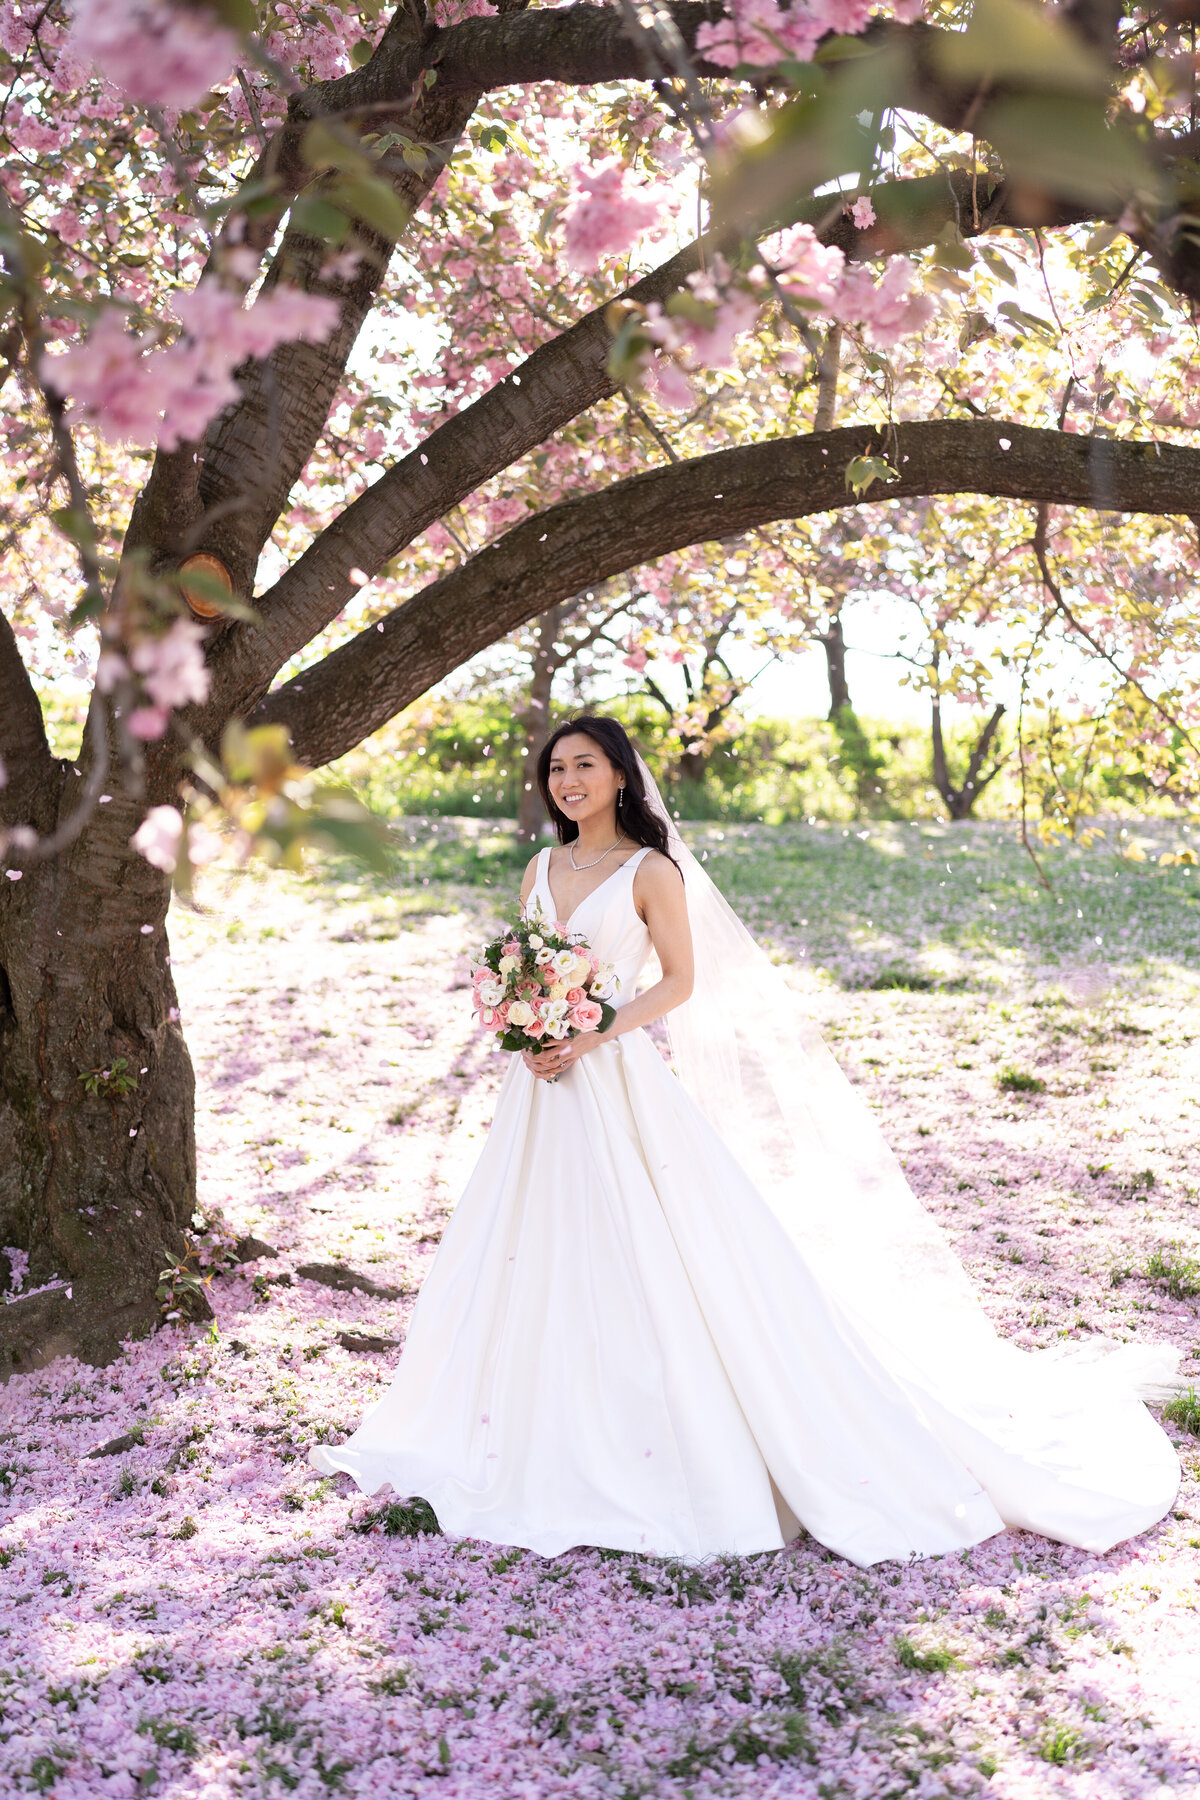 Amanda Gomez Photography - Central Park Wedding Photographer - 6